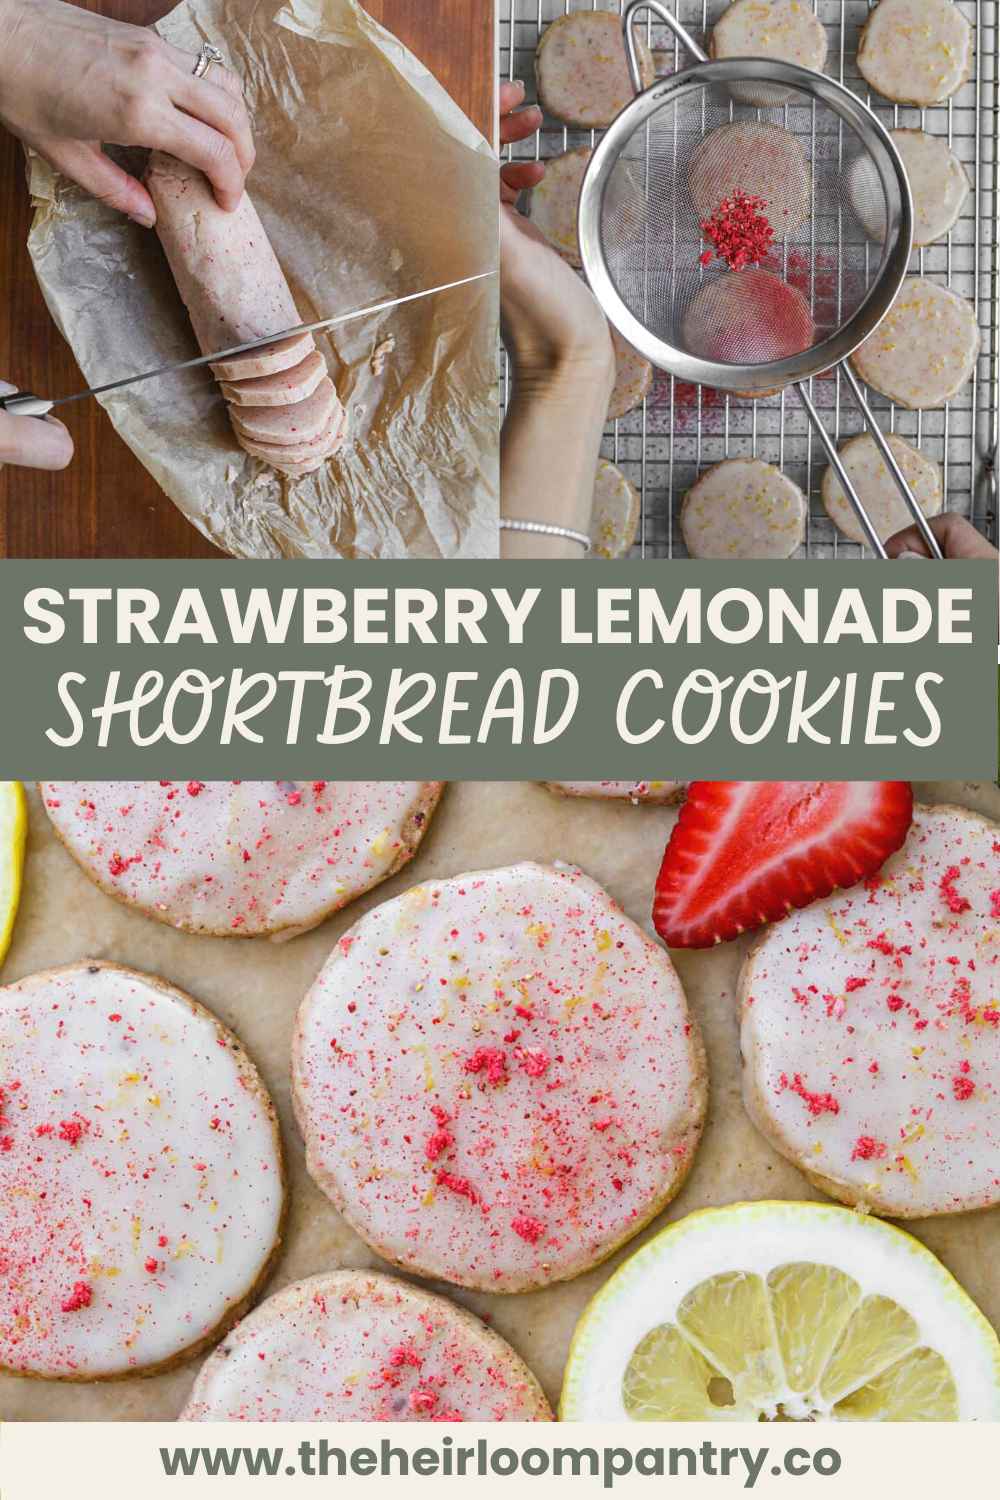 Strawberry lemonade shortbread cookies Pinterest pin.